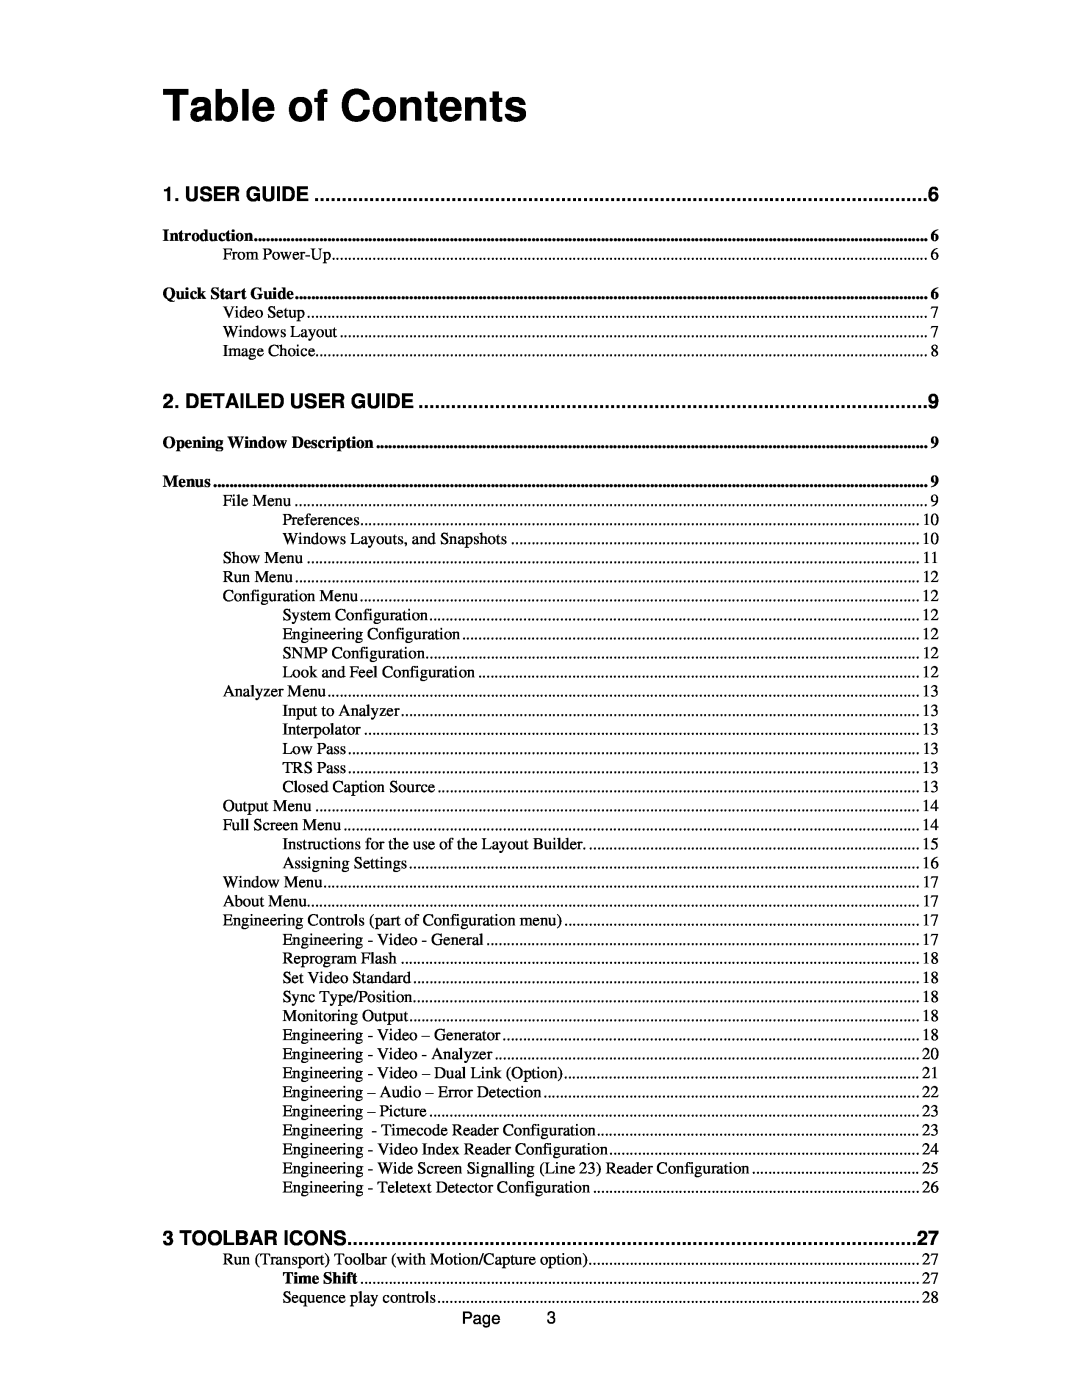 OmniTek OmniTek XR manual Table of Contents, Detailed User Guide 